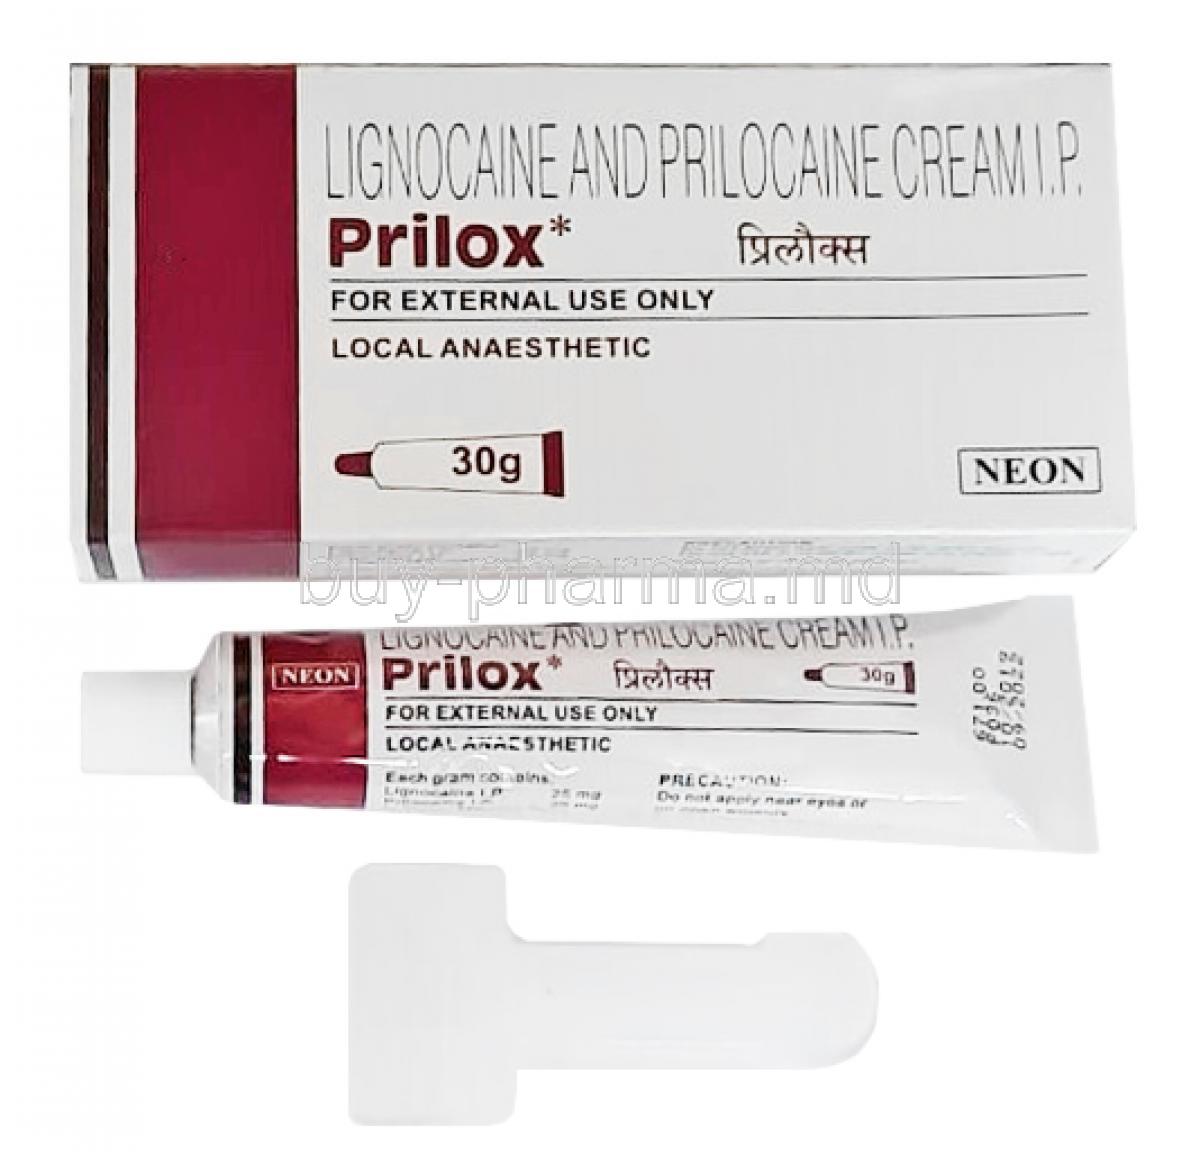 Prilox Cream, Prilocaine and Lidocaine 30g box and tube